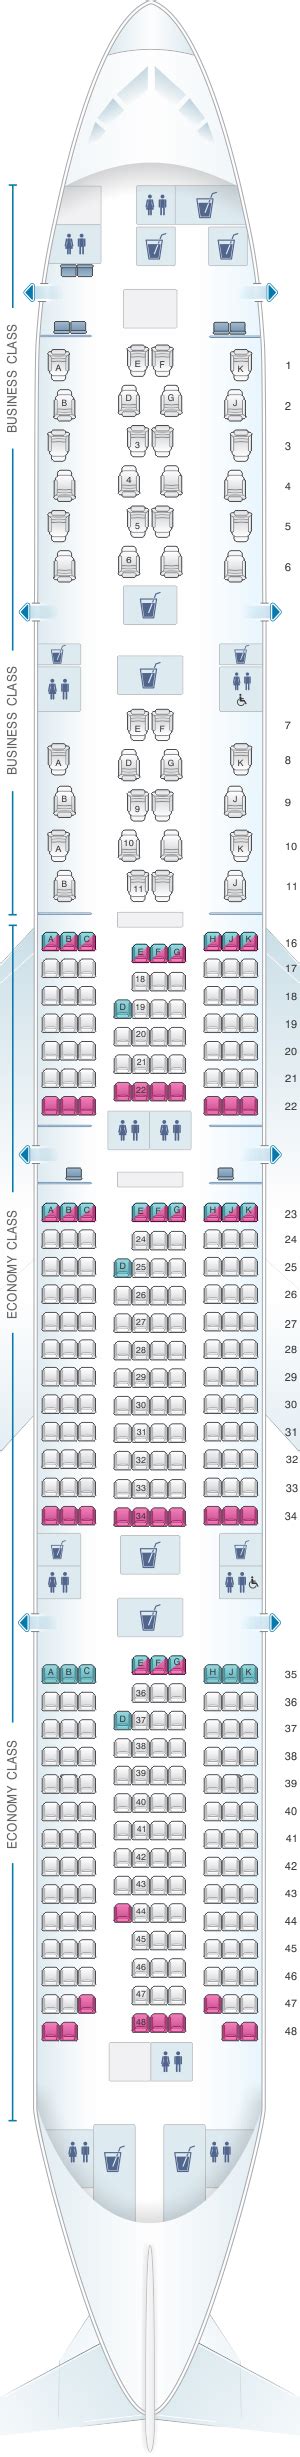 Seat Map 777 300er Qatar Airways Elcho Table